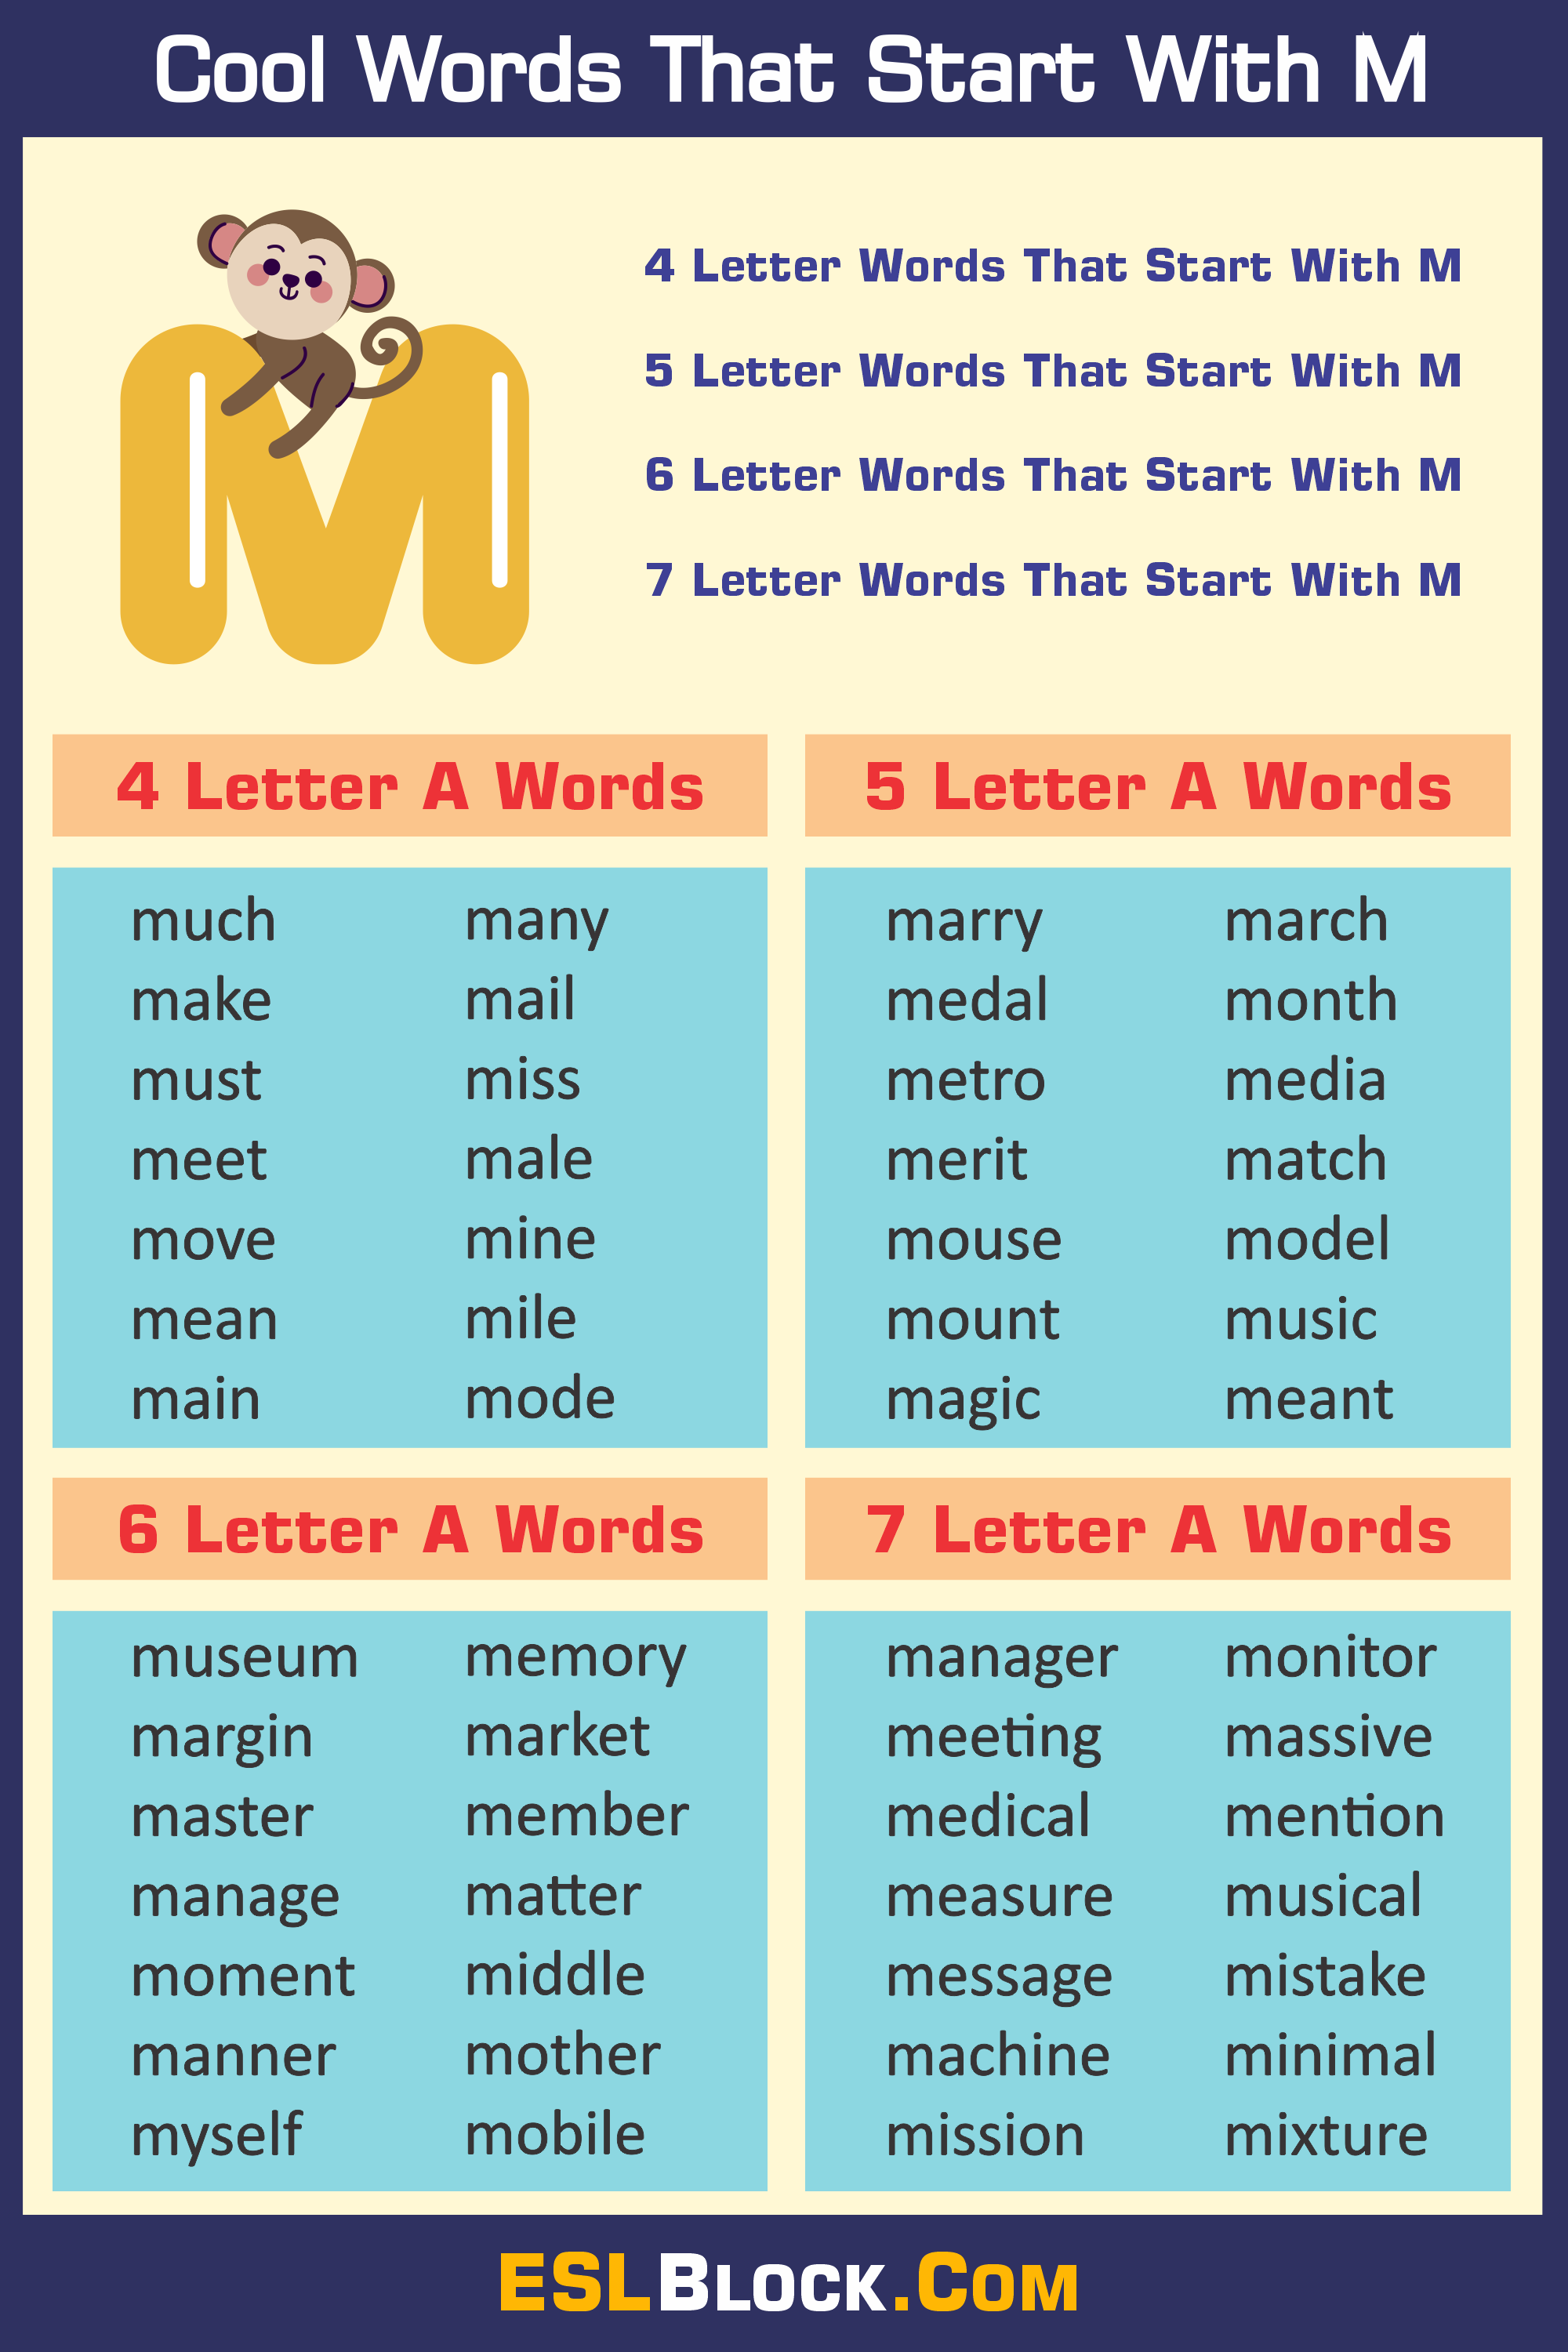 6 letter word 3rd letter m